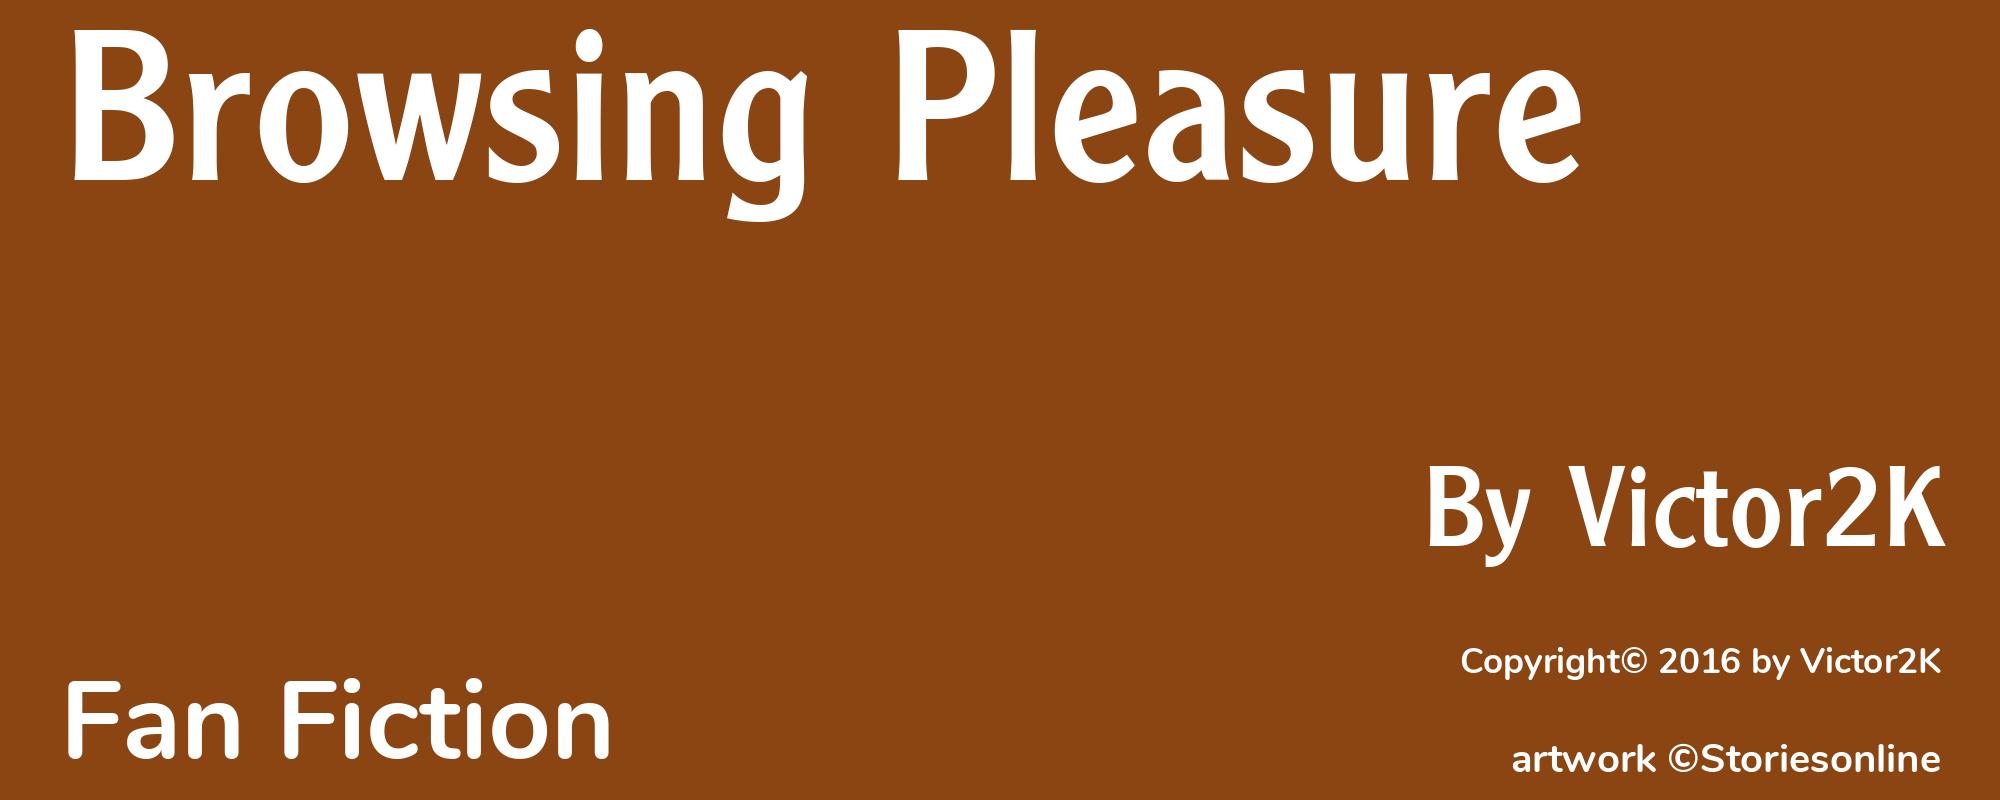 Browsing Pleasure - Cover